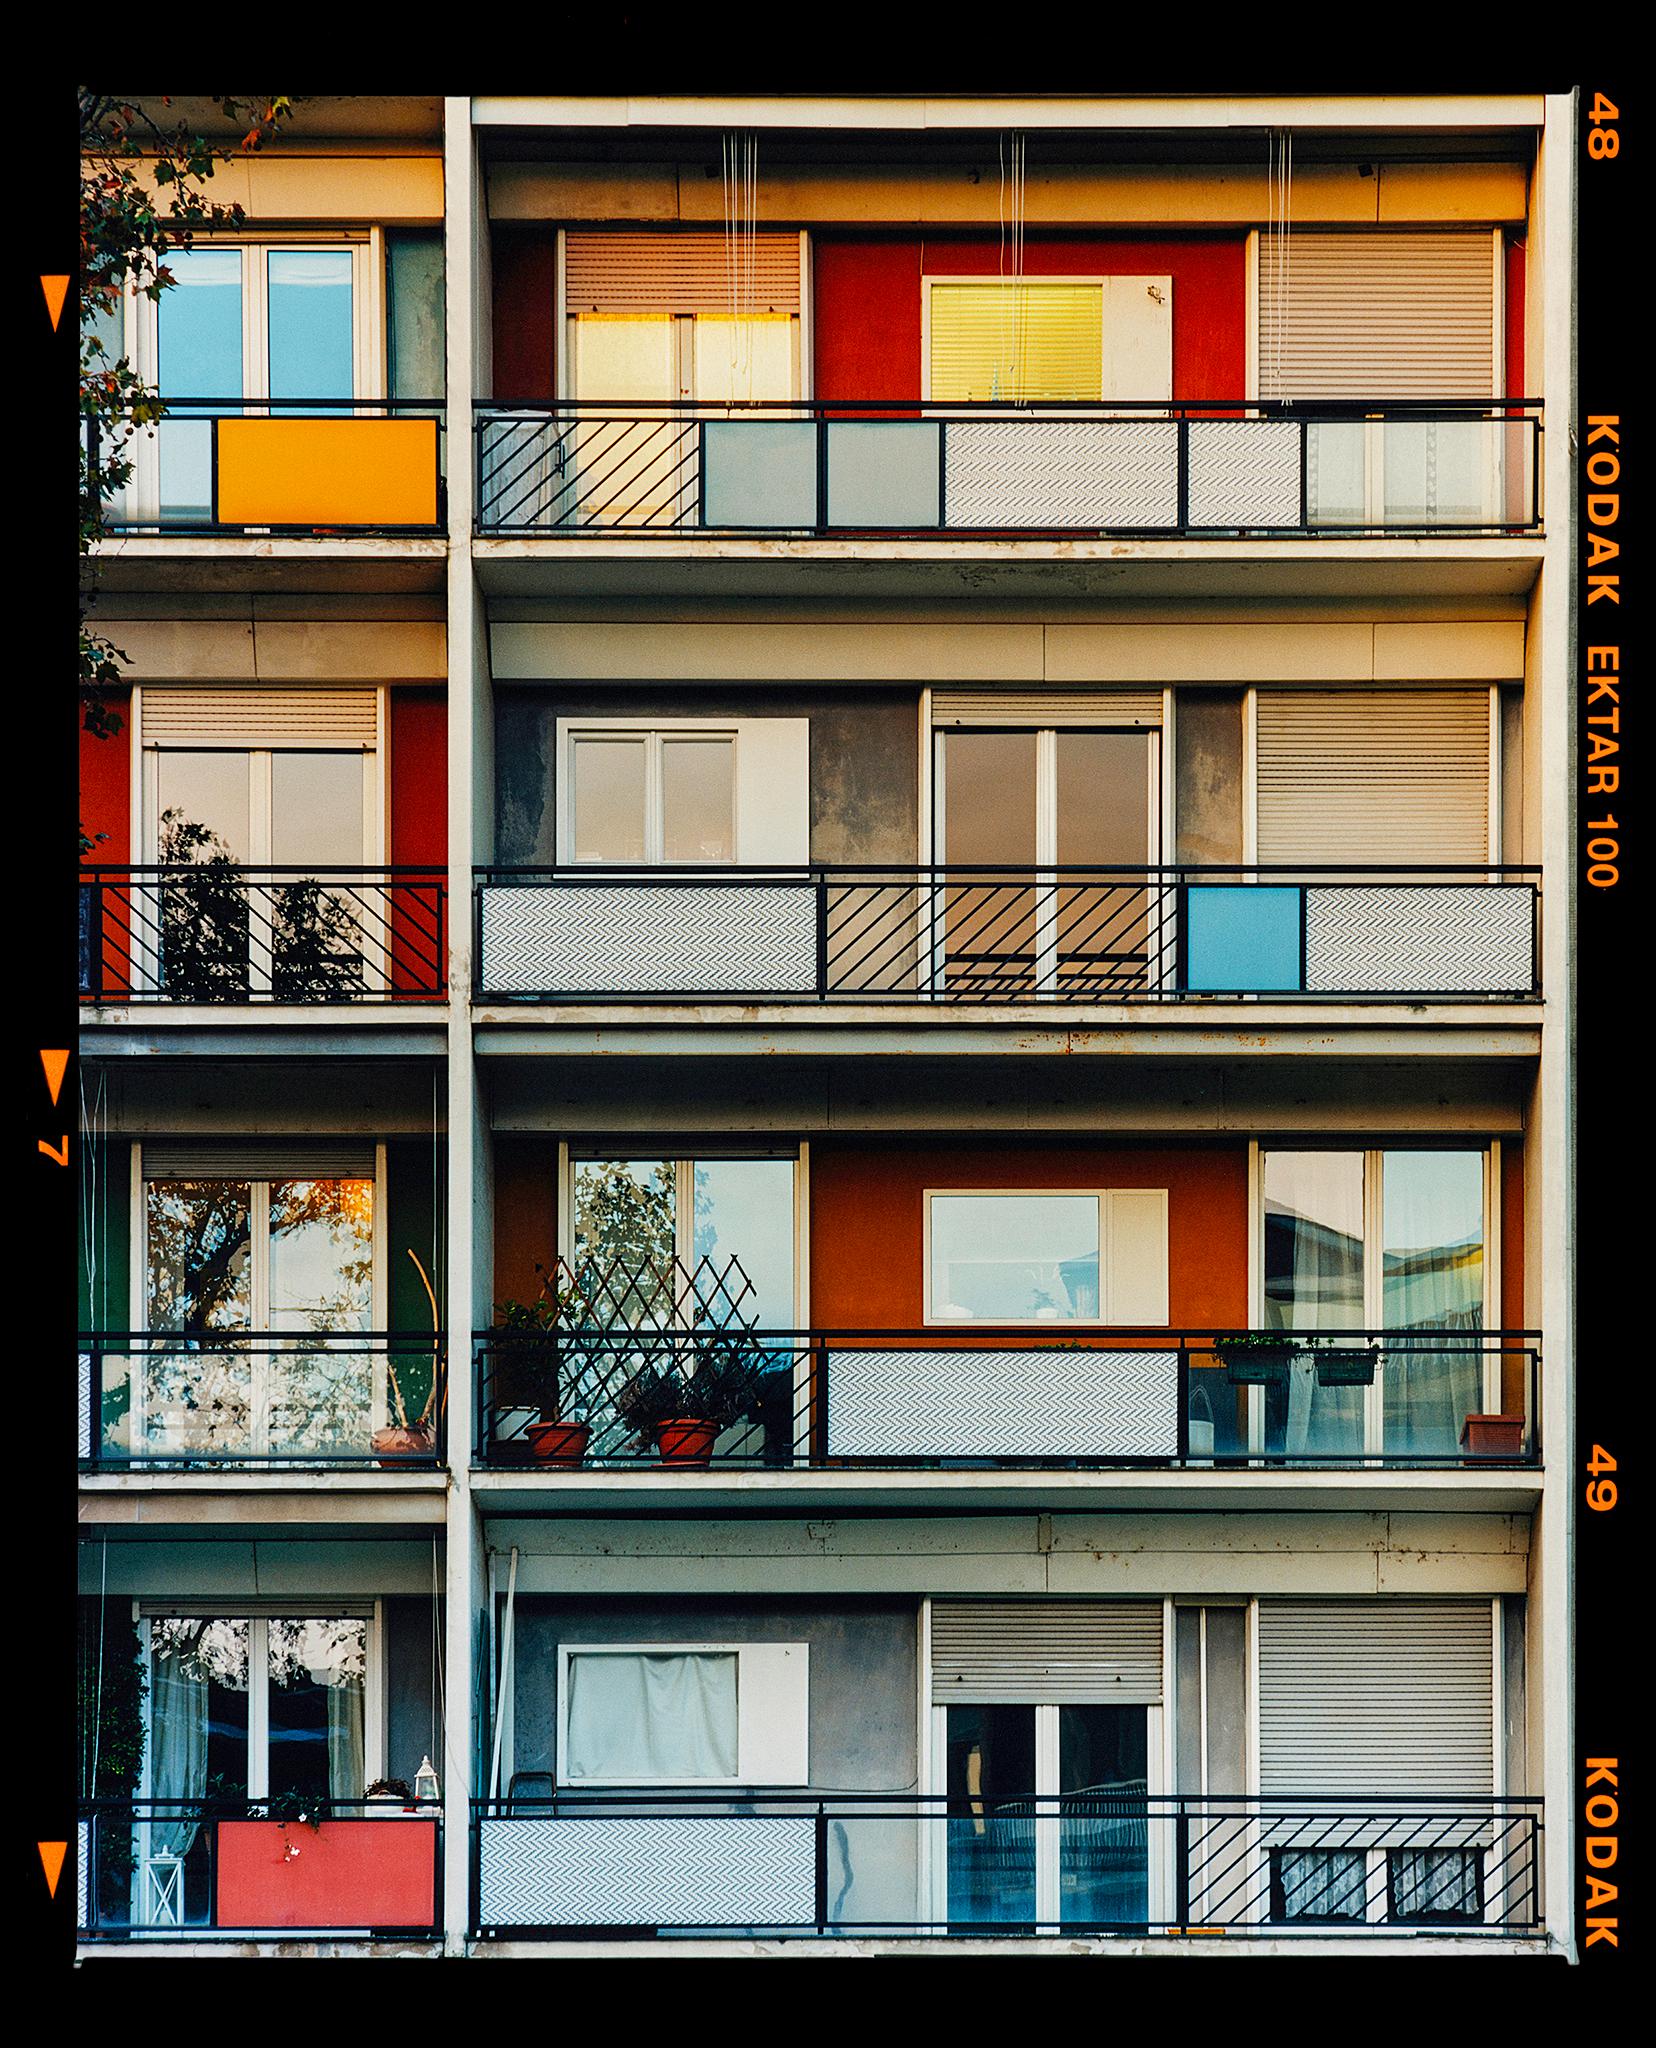 49 Via Dezza at Sunset, Milan - Italian Architecture Street Photography 